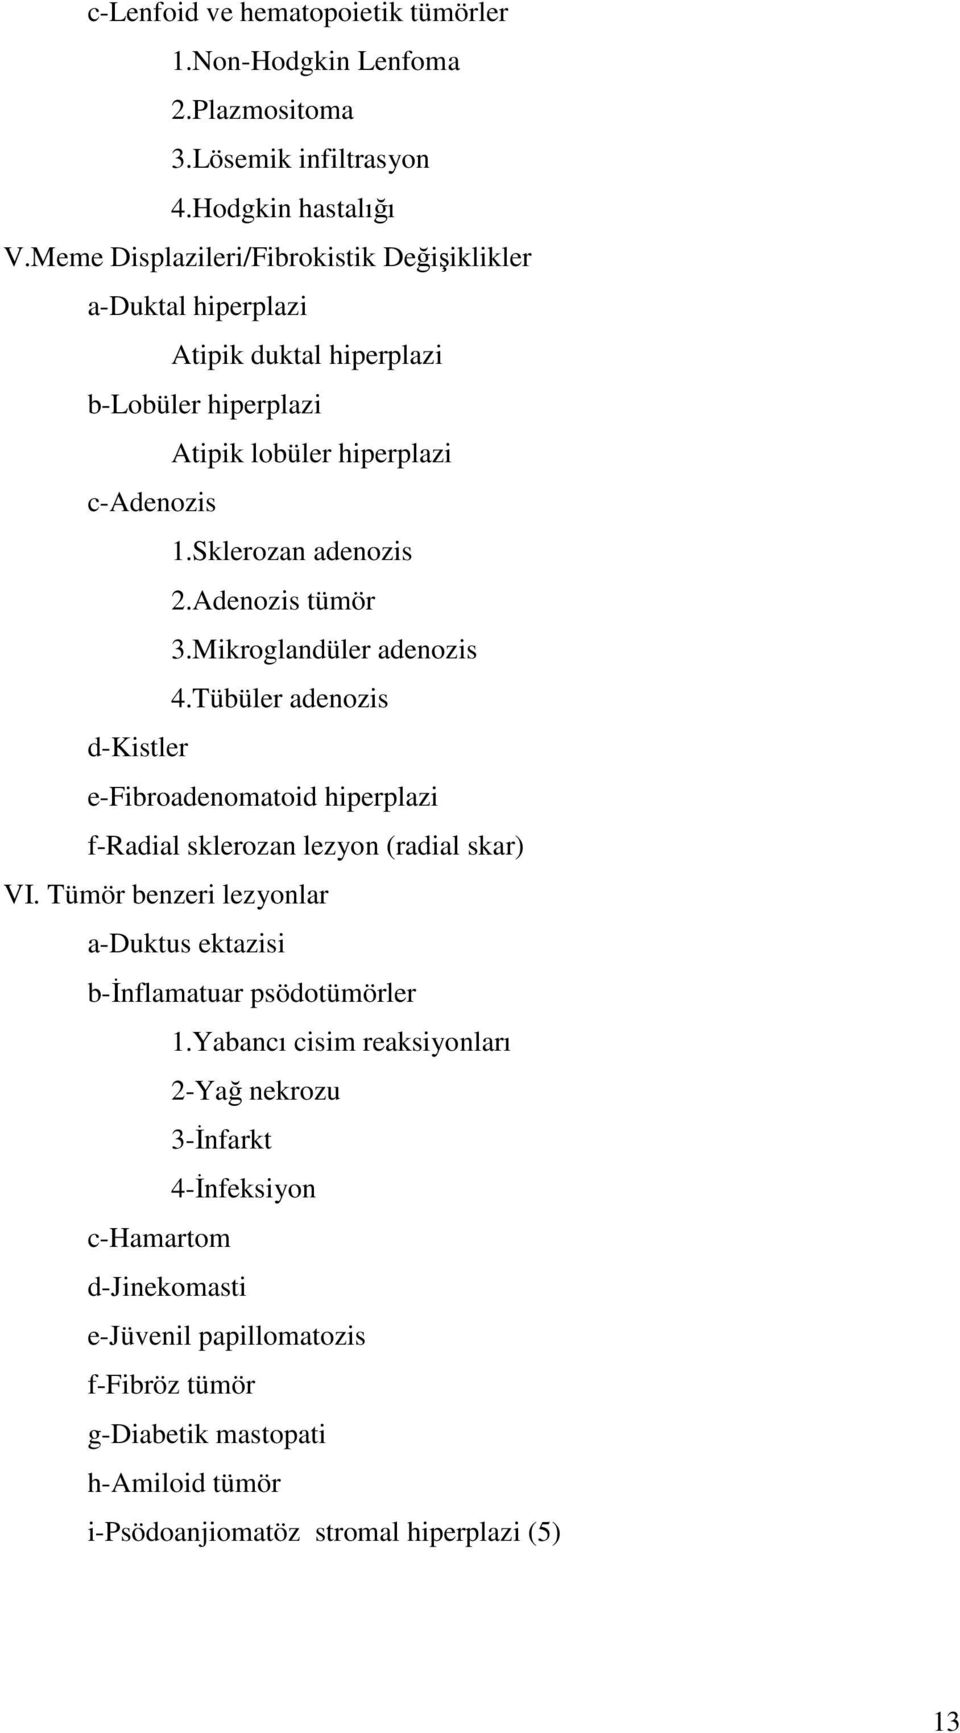 Adenozis tümör 3.Mikroglandüler adenozis 4.Tübüler adenozis d-kistler e-fibroadenomatoid hiperplazi f-radial sklerozan lezyon (radial skar) VI.